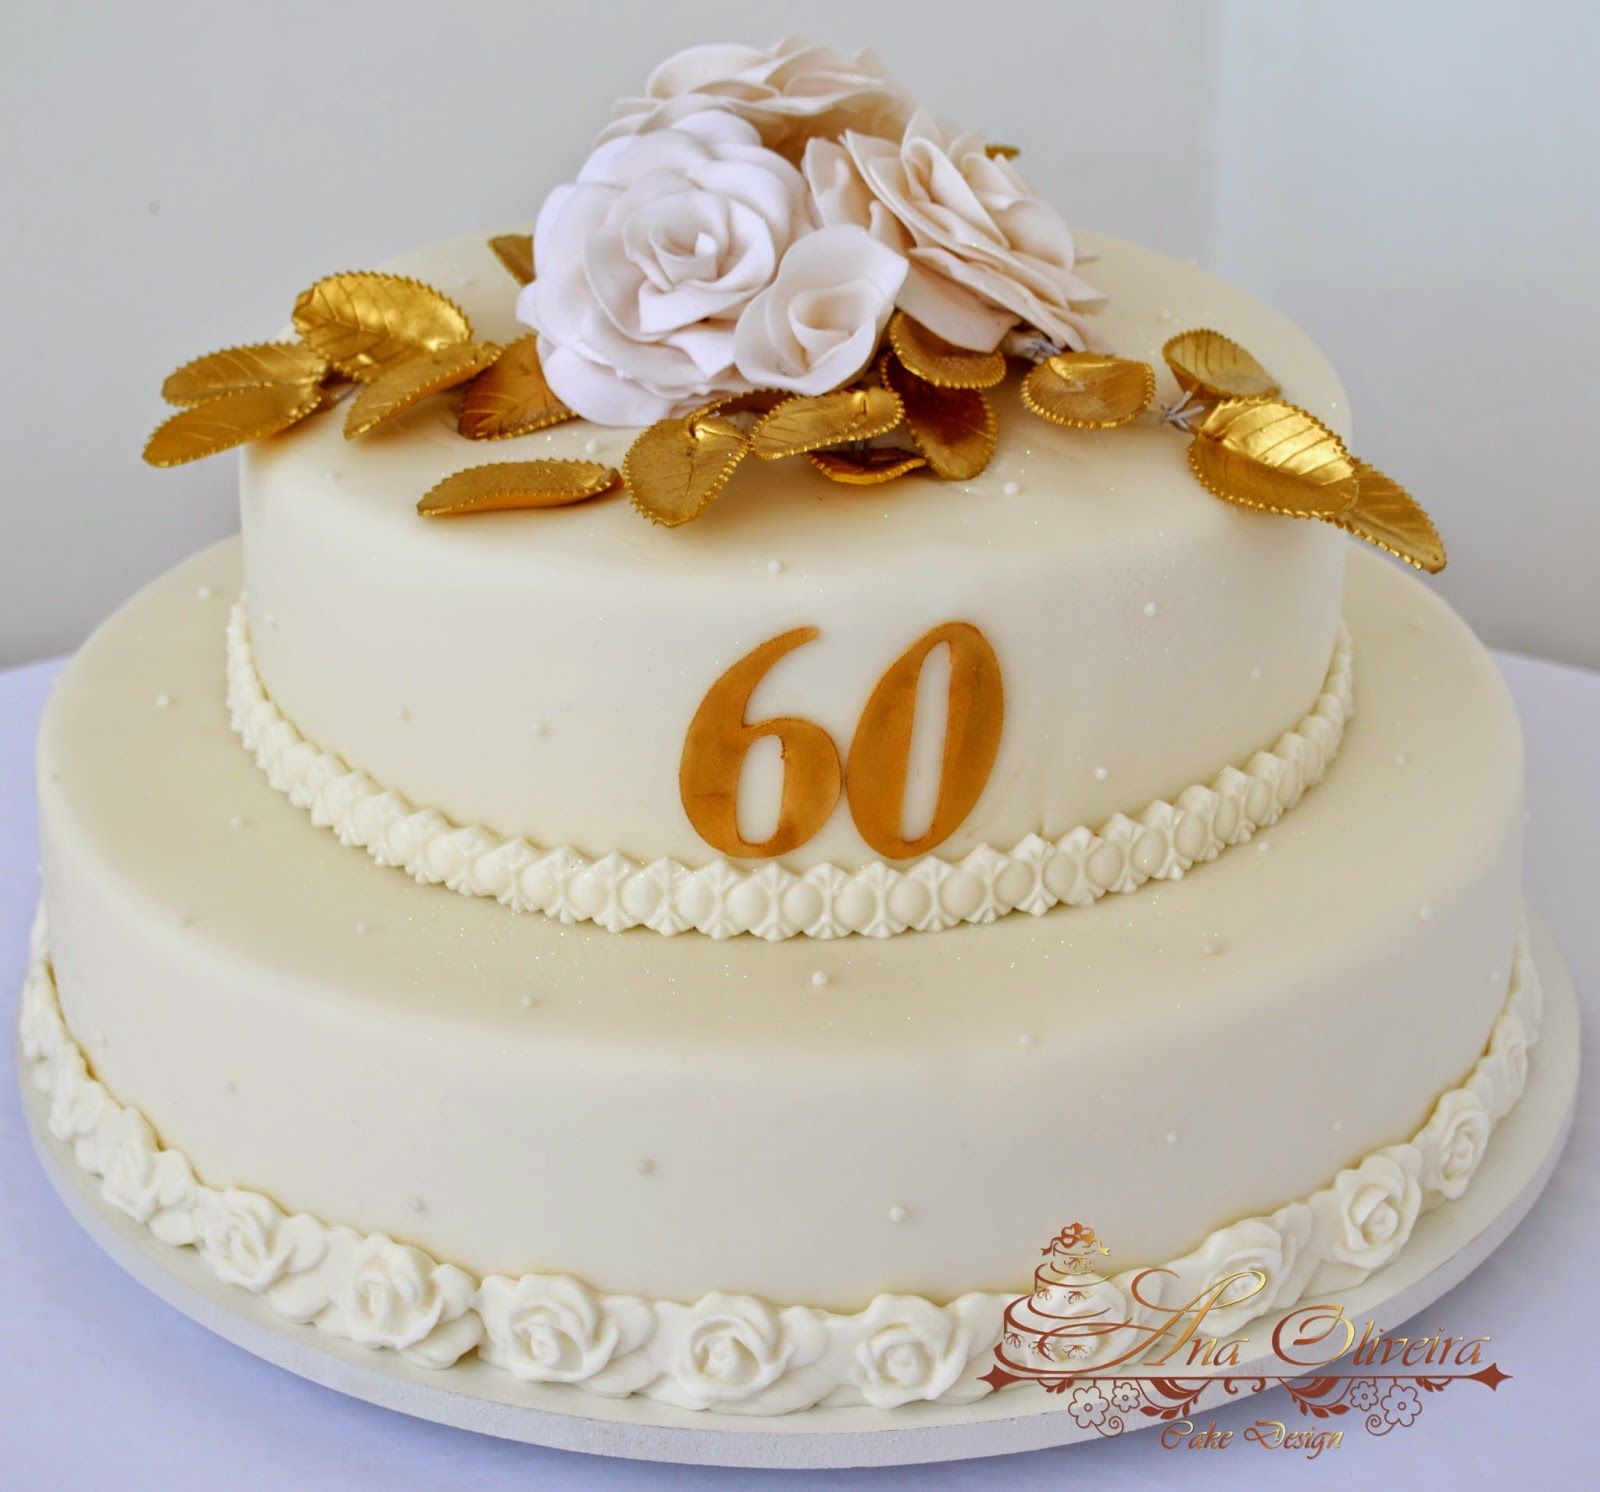 торт на 70 летие женщине фото